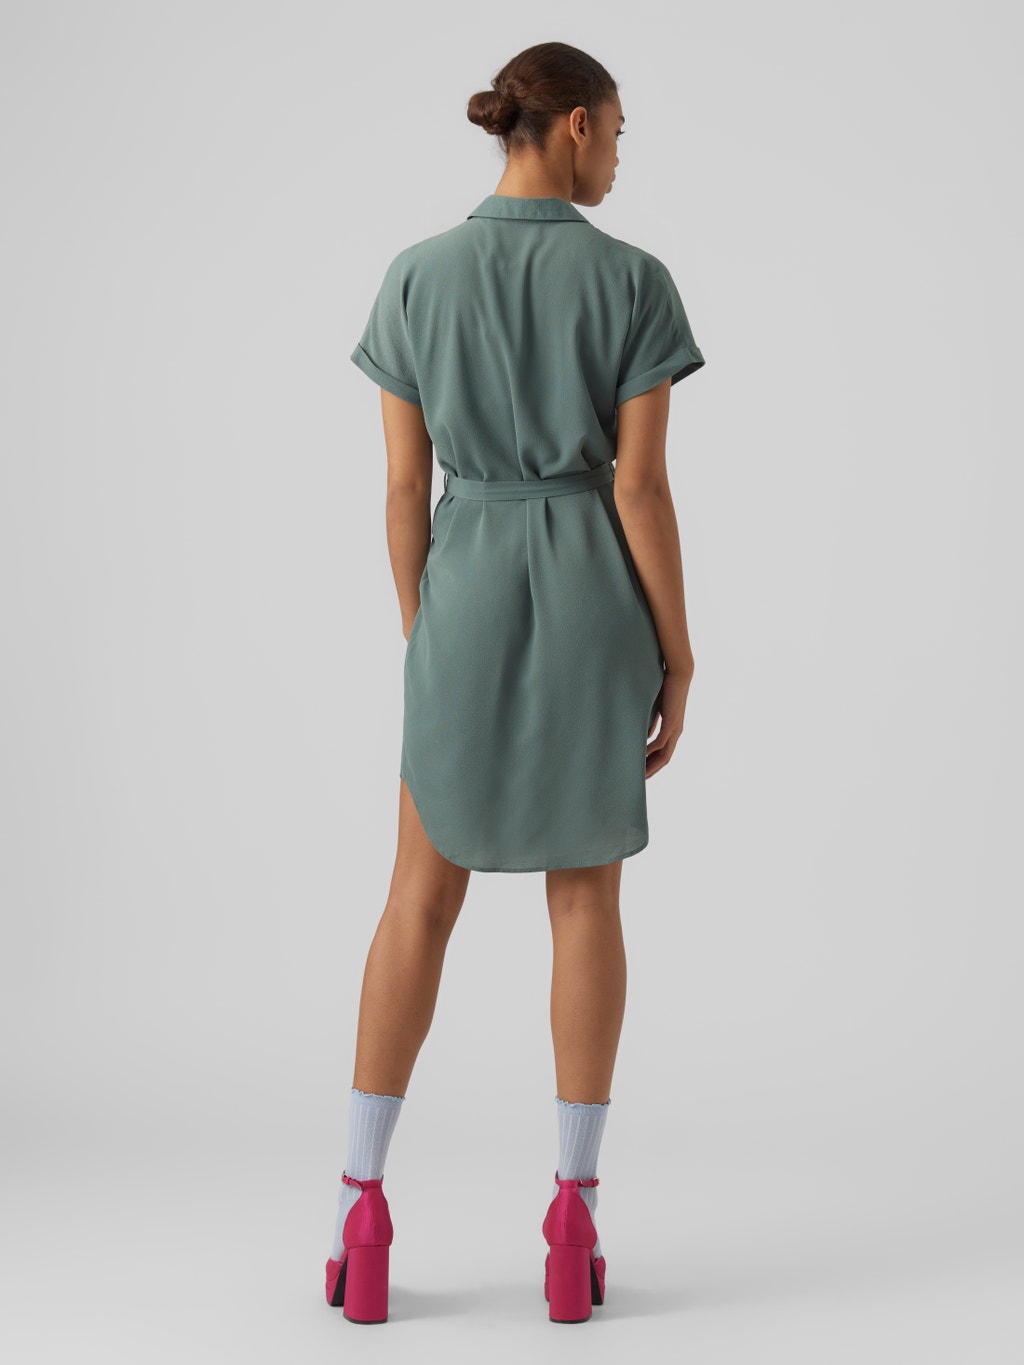 klasse ik ga akkoord met Onenigheid Regular fit Overhemd kraag Korte jurk | Medium Green | Vero Moda®